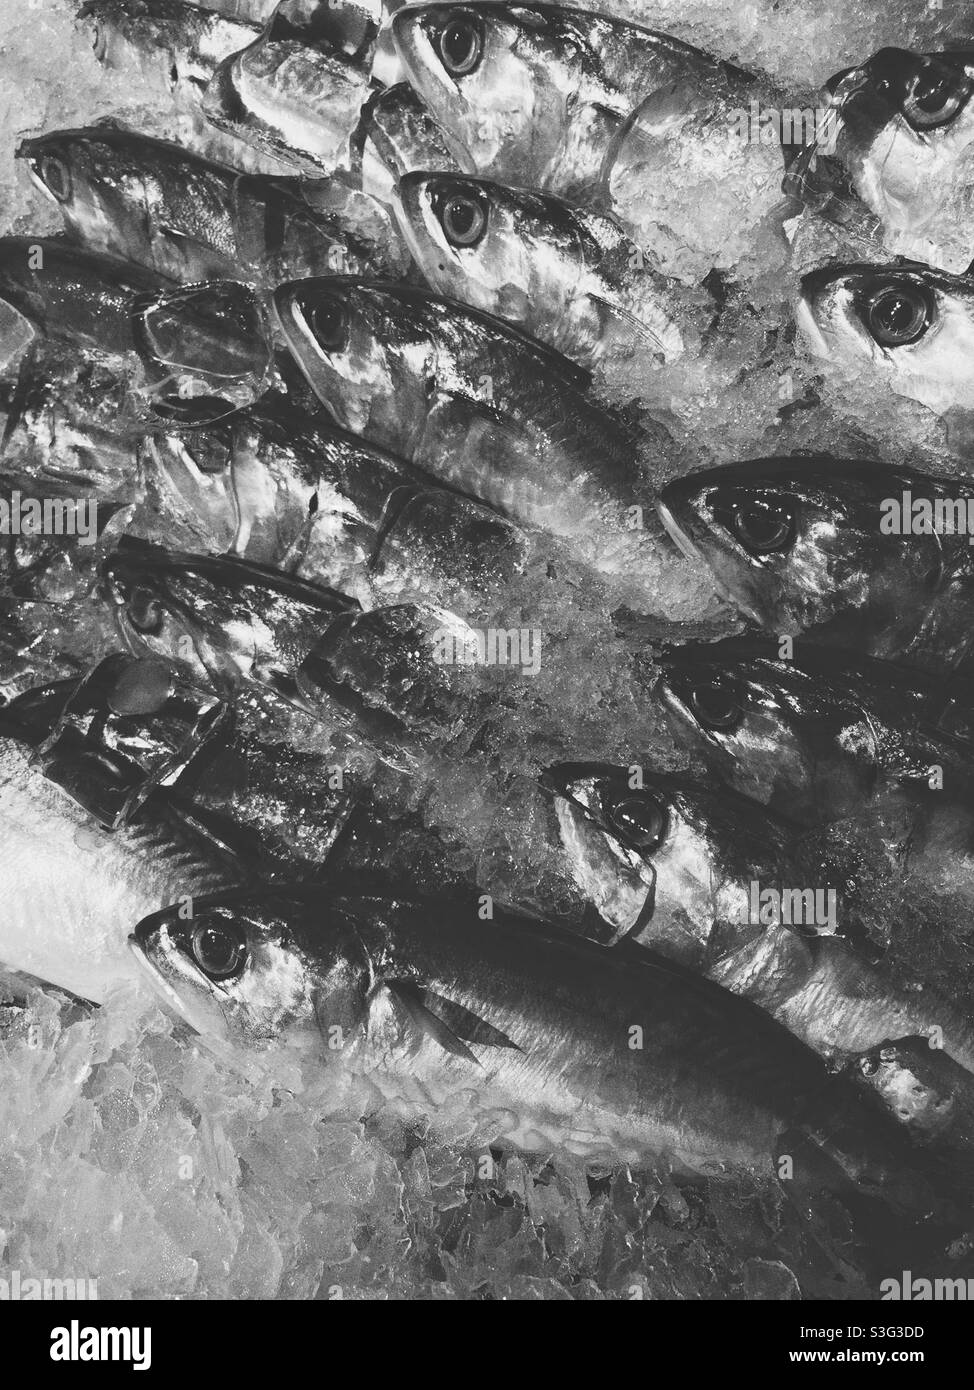 Sardines on ice Stock Photo - Alamy